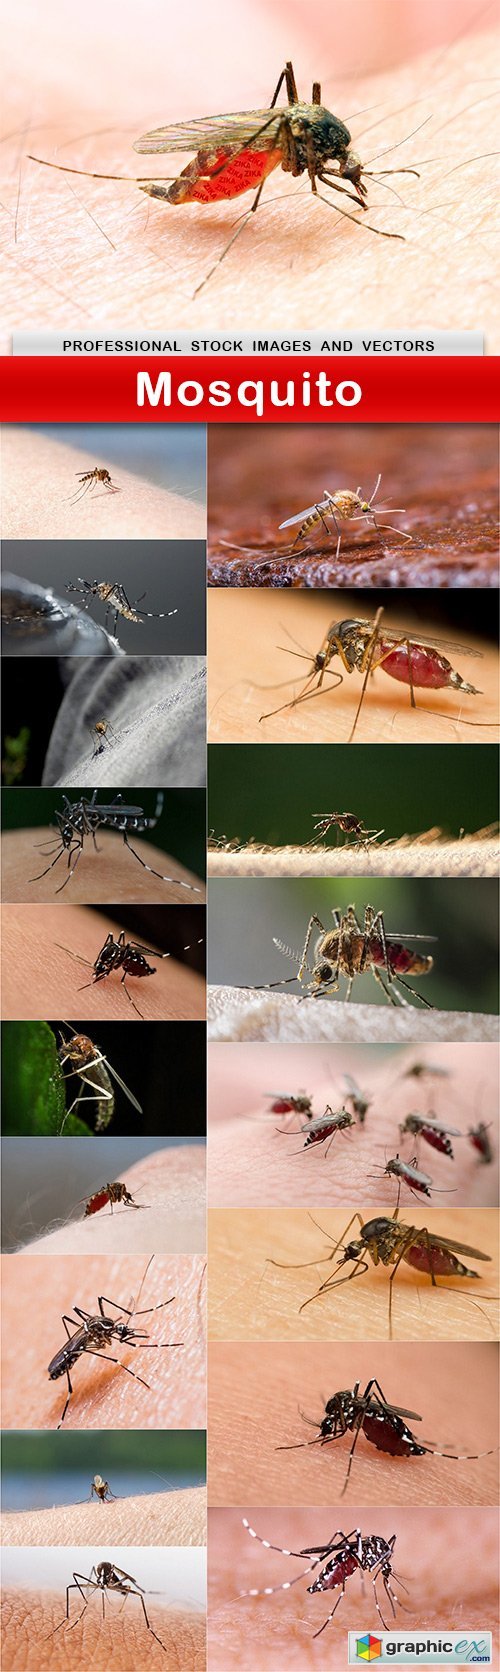 Mosquito - 19 UHQ JPEG